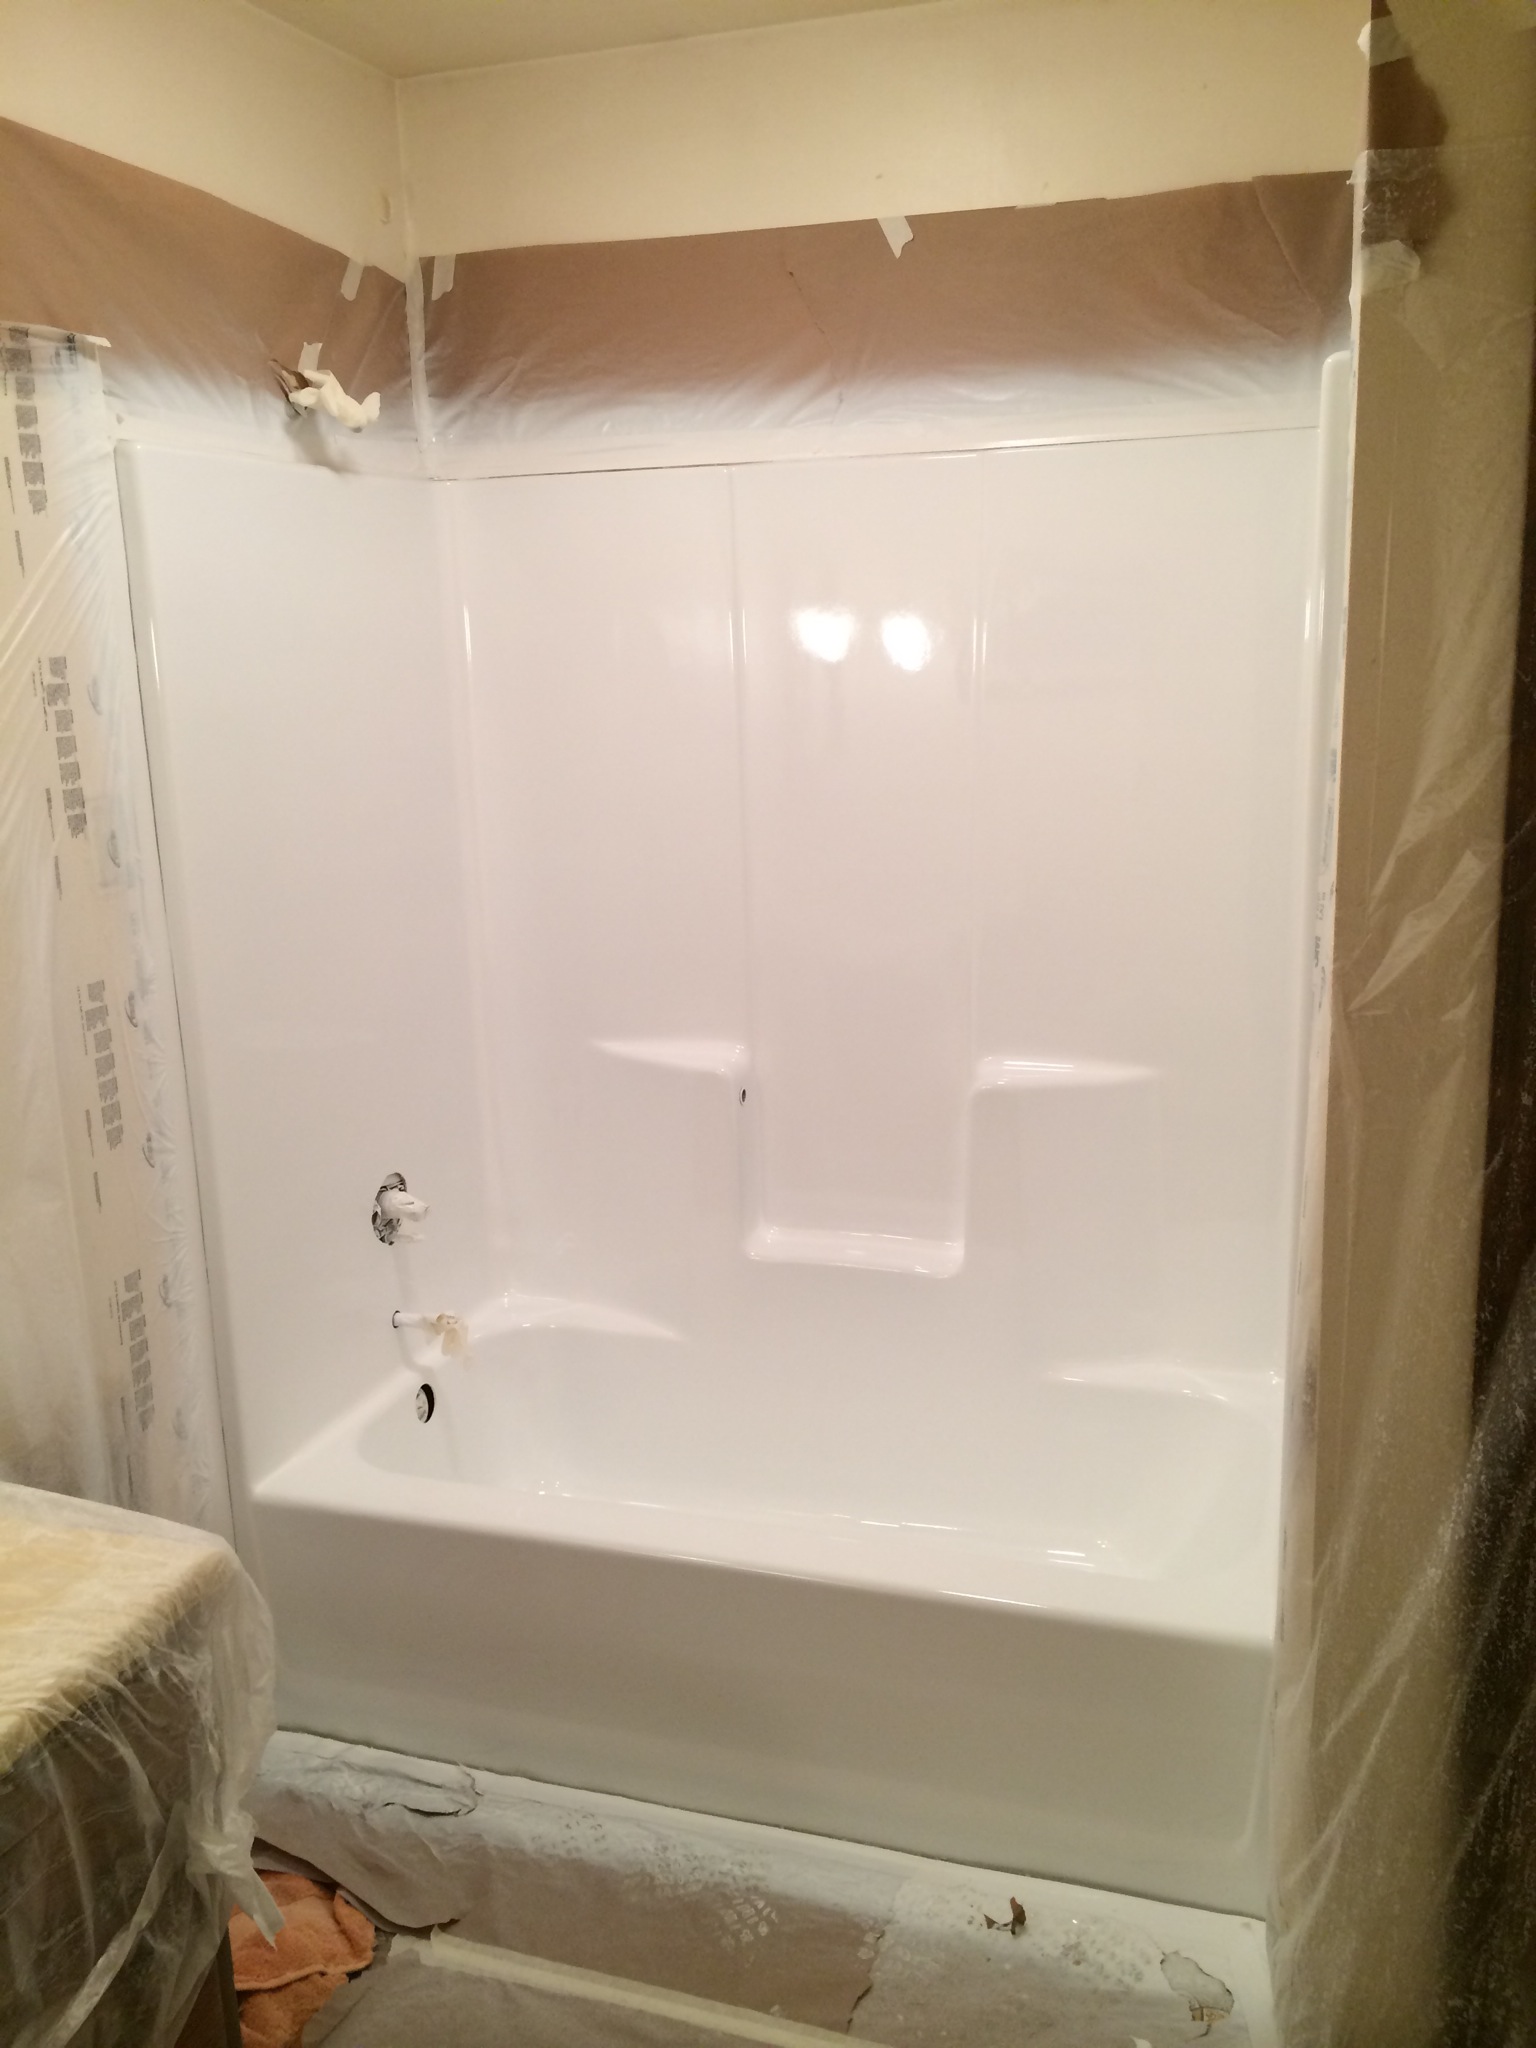 Can a fiberglass tub be resurfaced? - Total Bathtub Refinishing/Tub